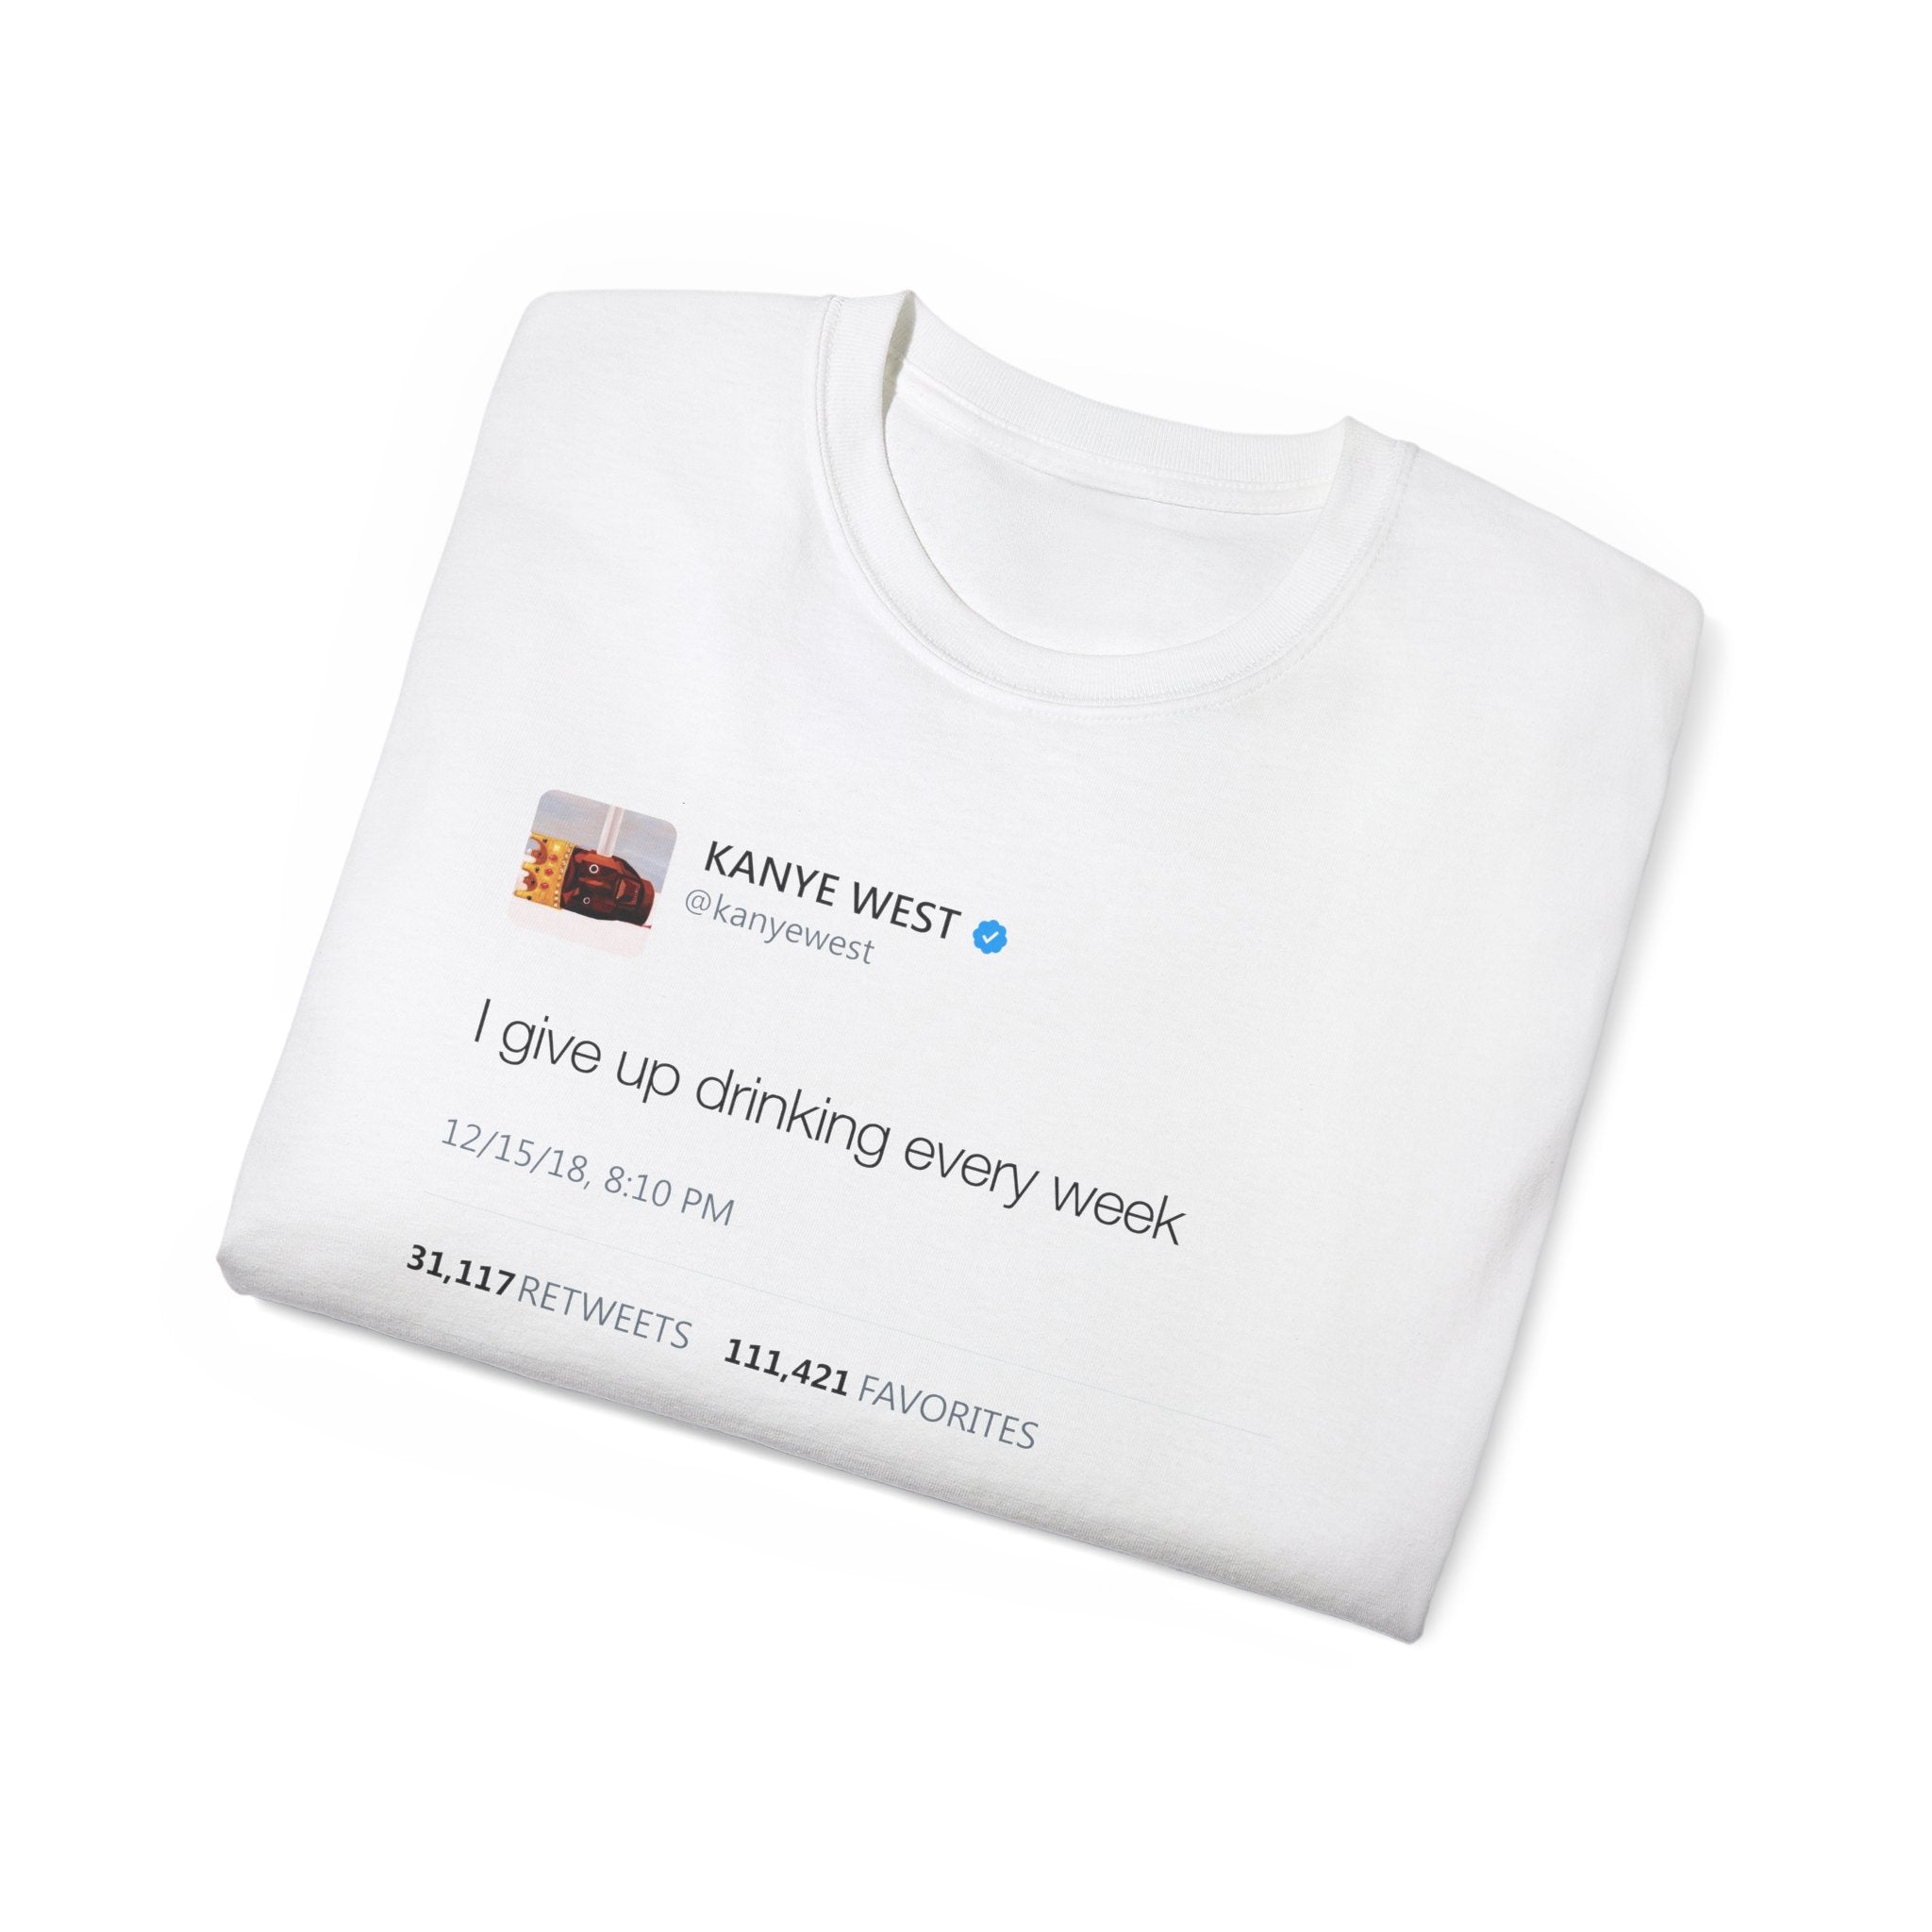 I give up drinking every week Kanye West Tweet T-Shirt